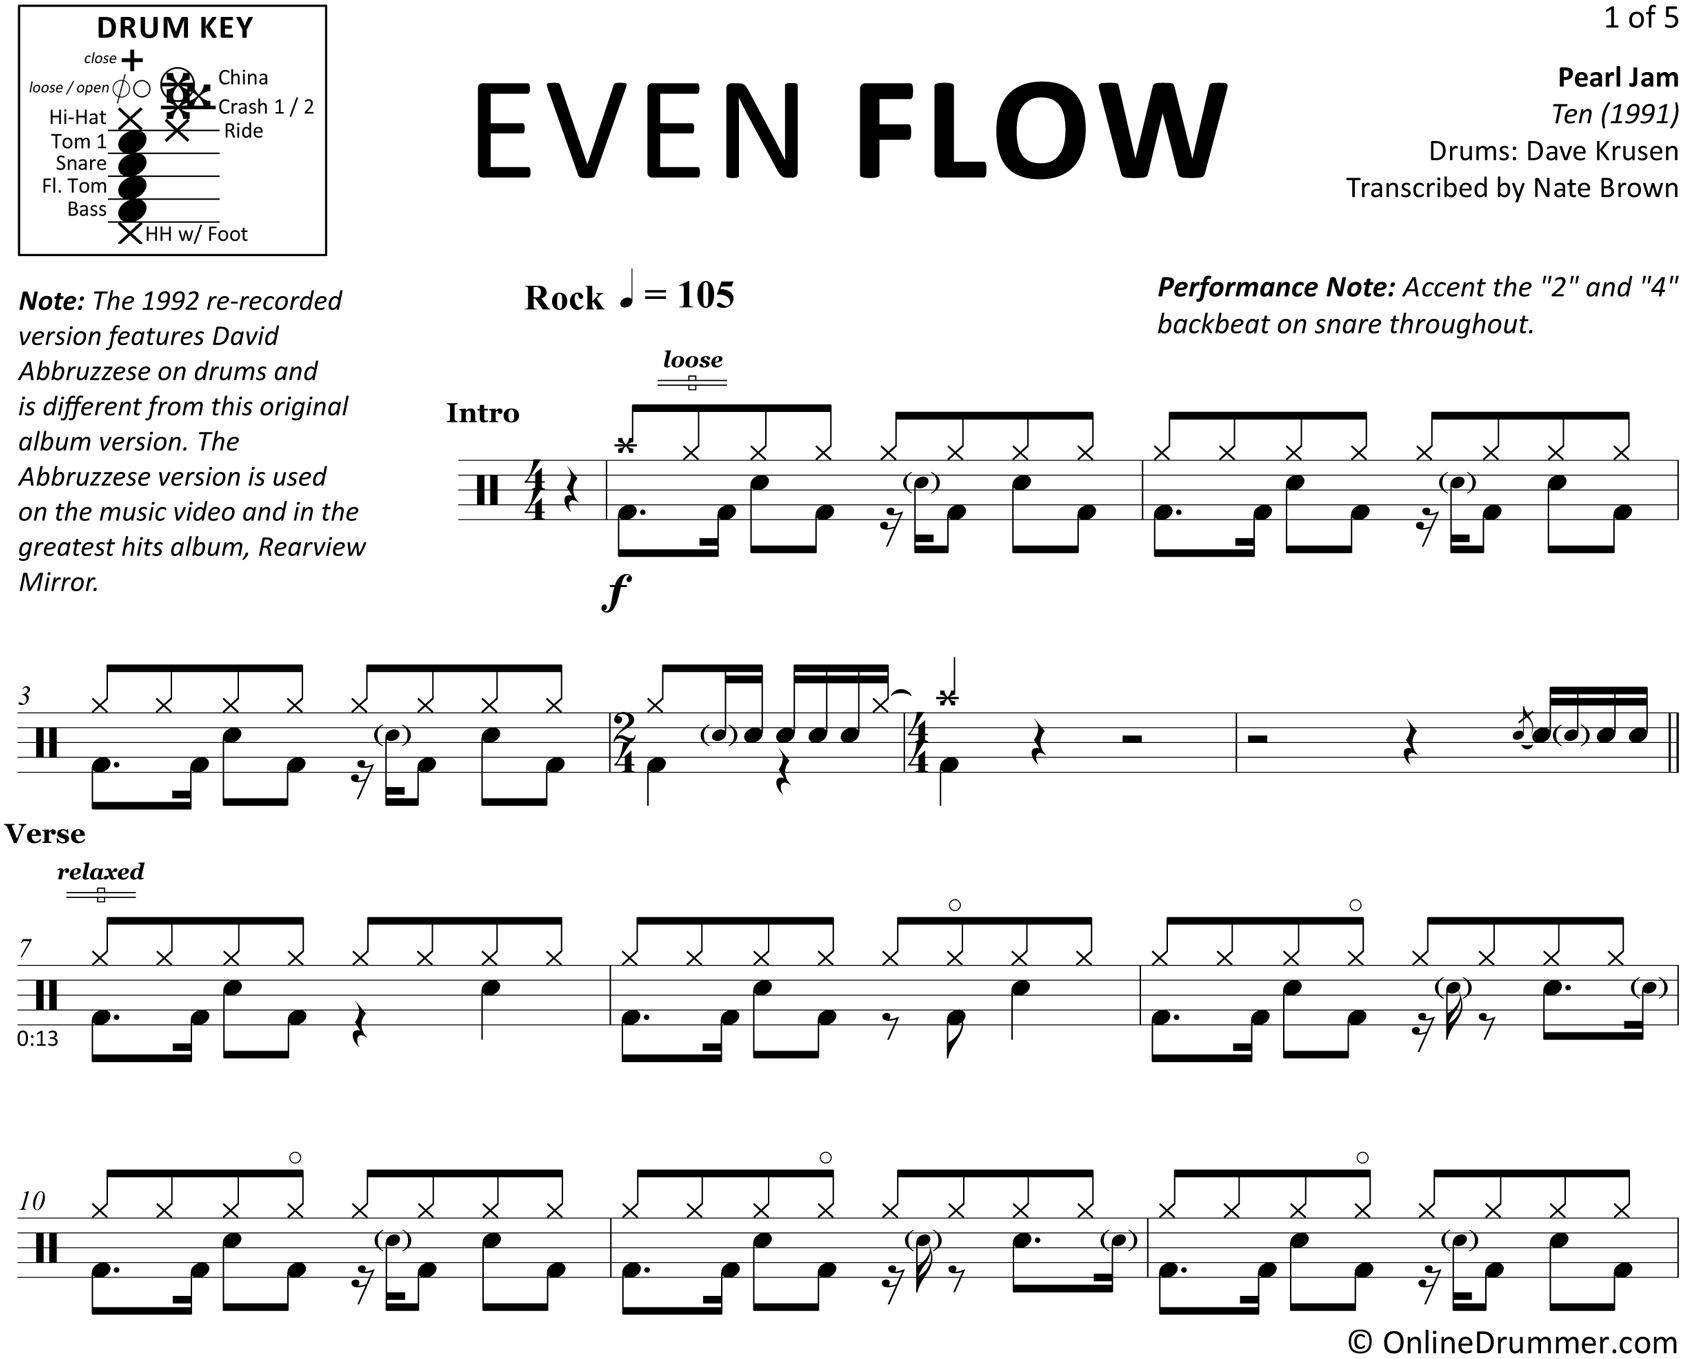 Even Flow - Pearl Jam - Drum Sheet Music